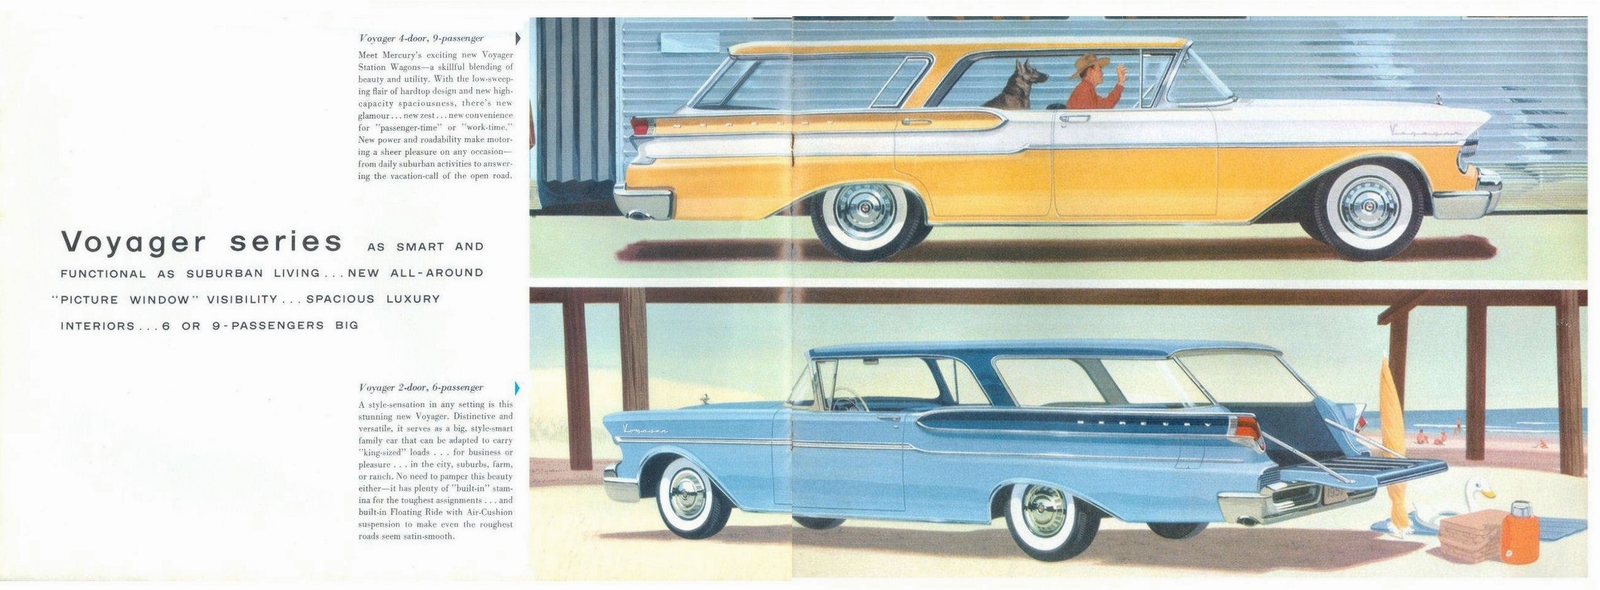 n_1957 Mercury Wagons-06-07.jpg